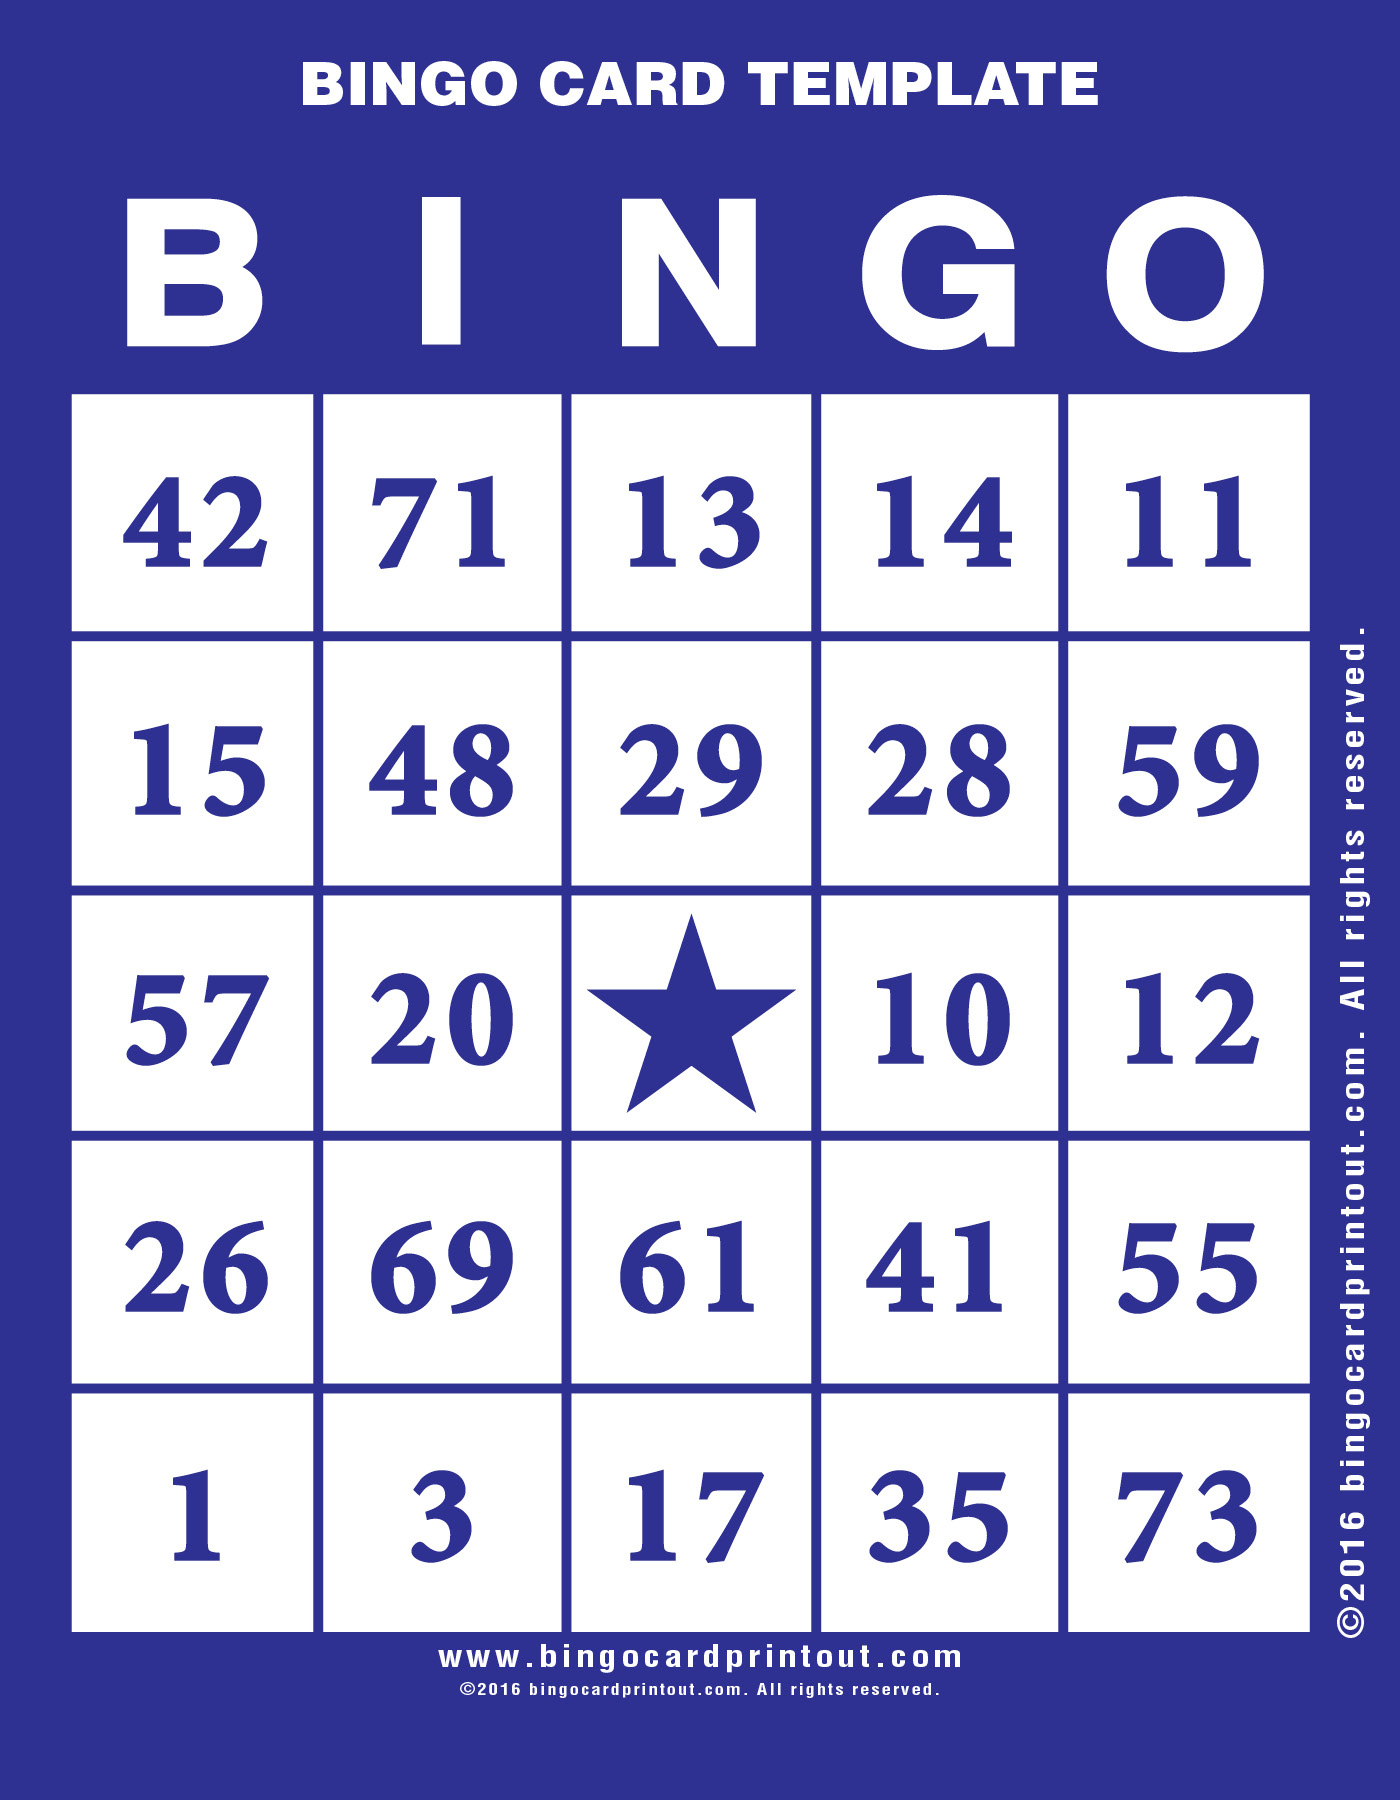 Bingo Card Template BingoCardPrintout